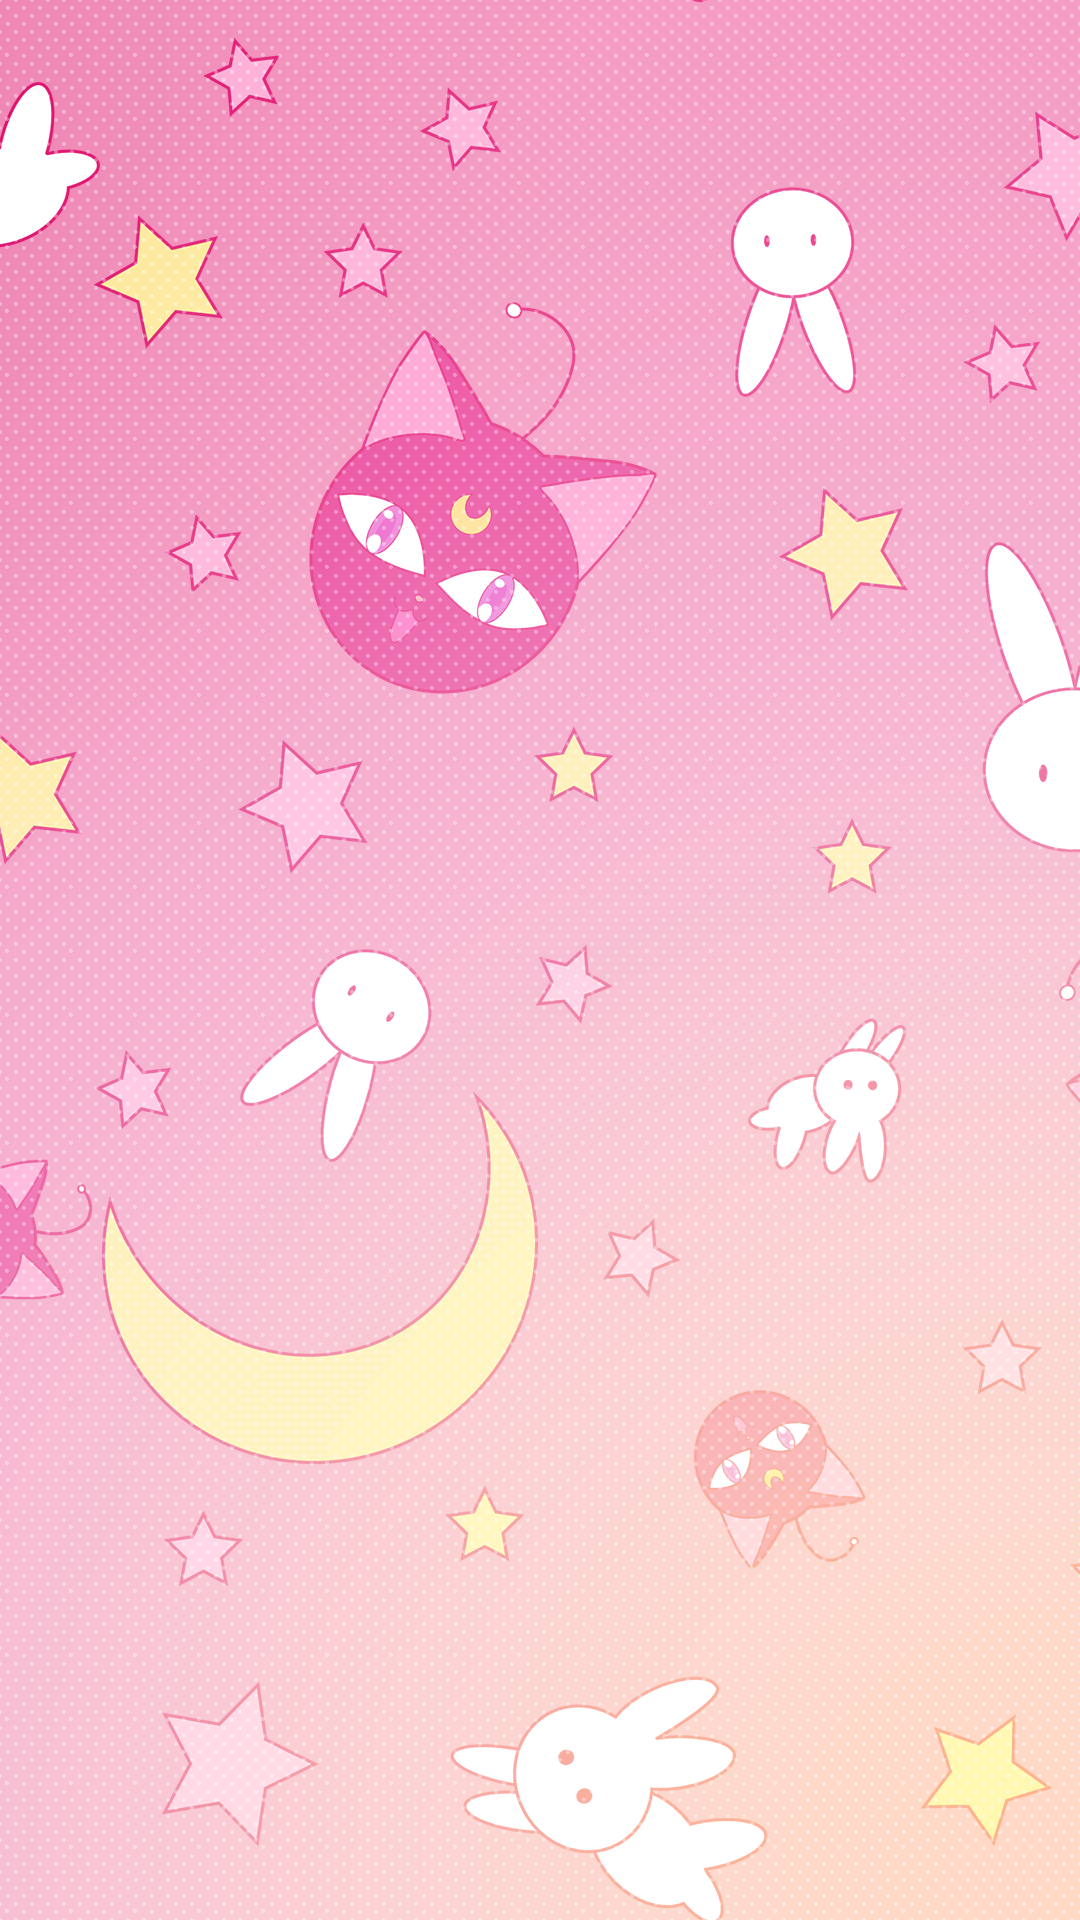 Sailor moon cute pink wallpaper 1080 x 1920 HD (anime, otaku, magical girl, magic wand, star, cat). Sailor moon wallpaper, Pink wallpaper, Pink moon wallpaper